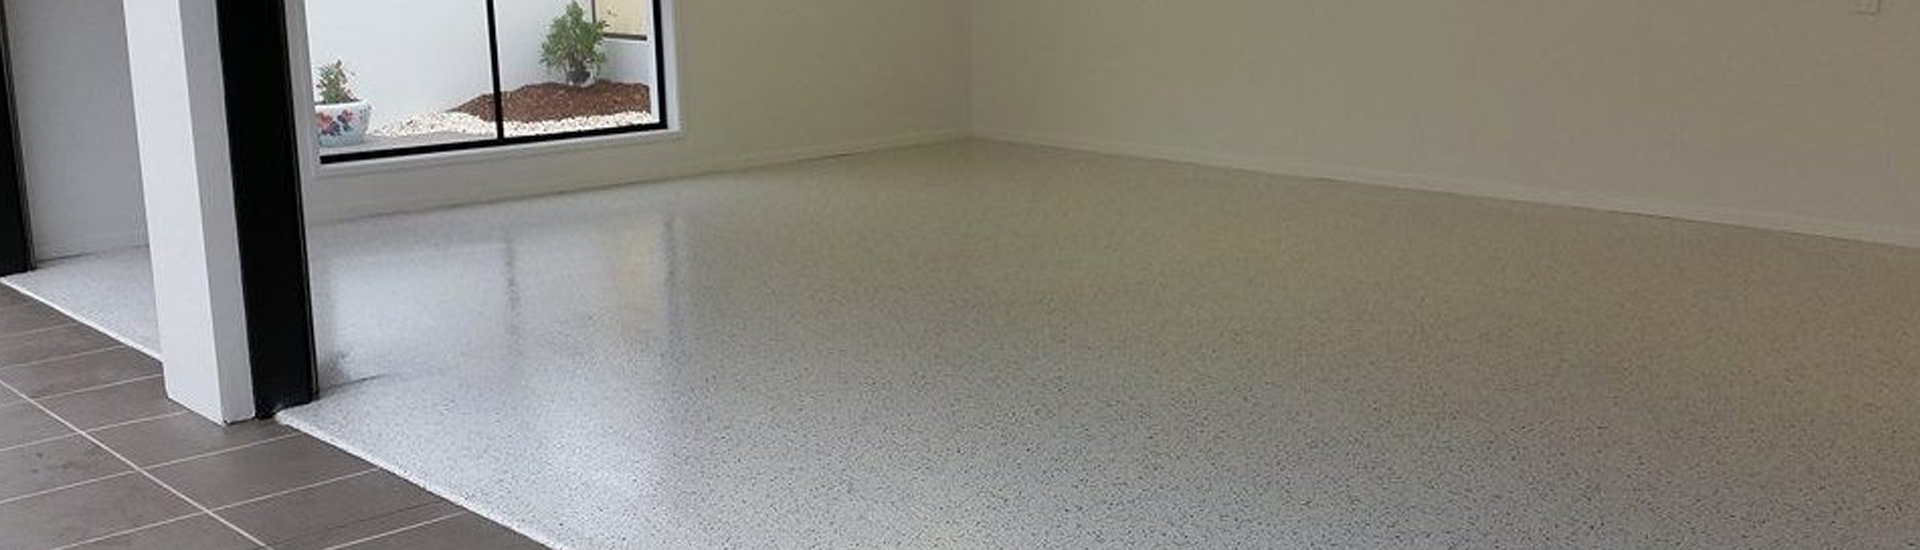 JBL Seamless Flooring - Epoxy Flake Flooring